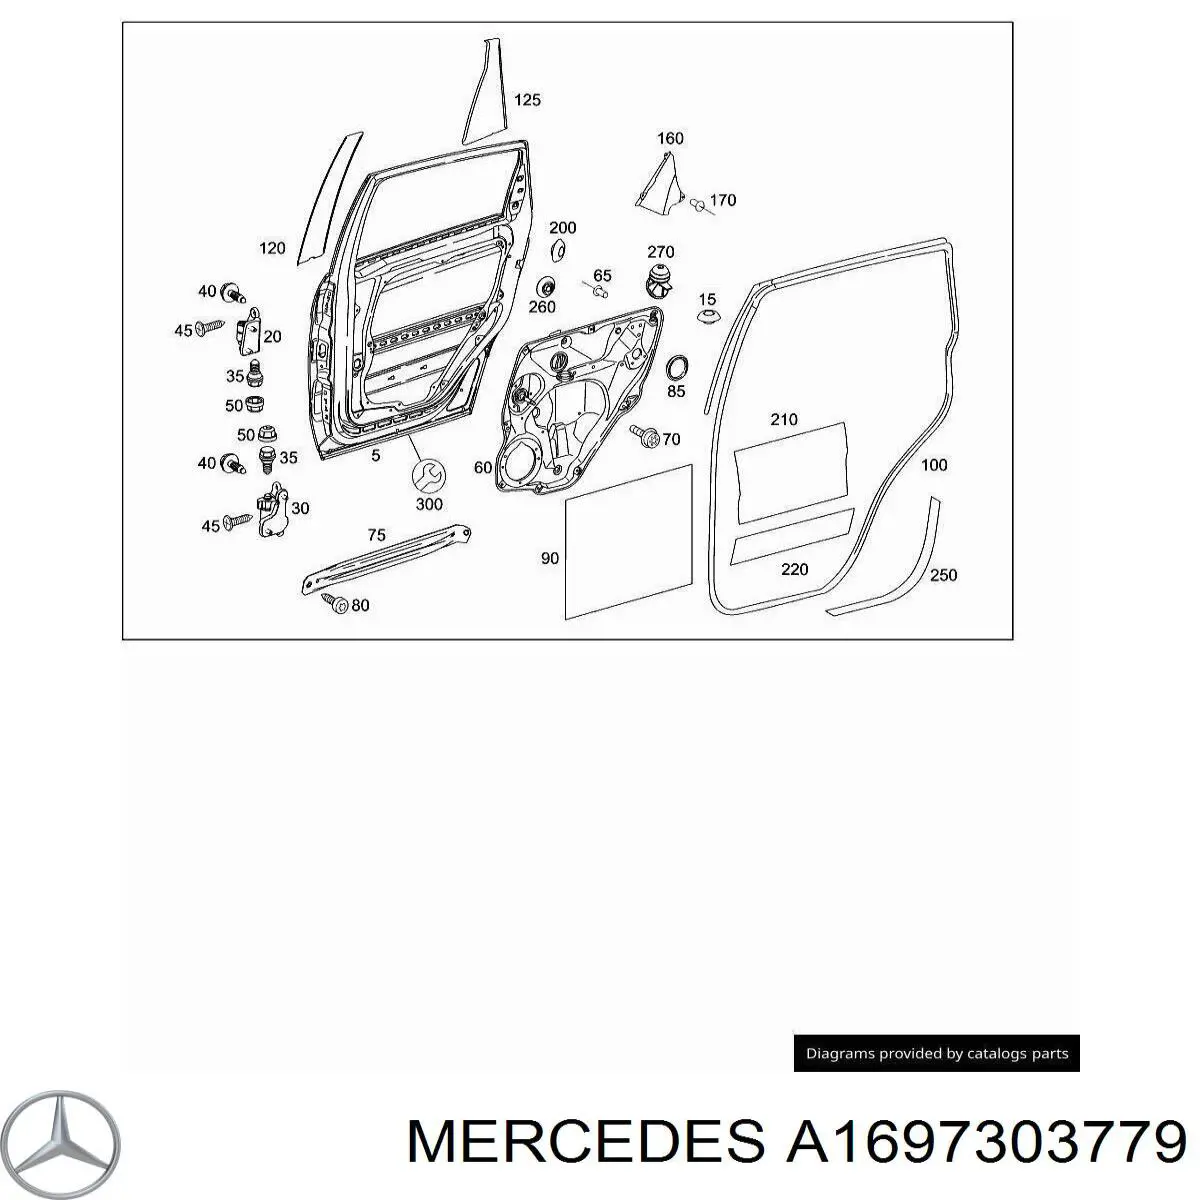 A1697303779 Mercedes механизм стеклоподъемника двери задней левой